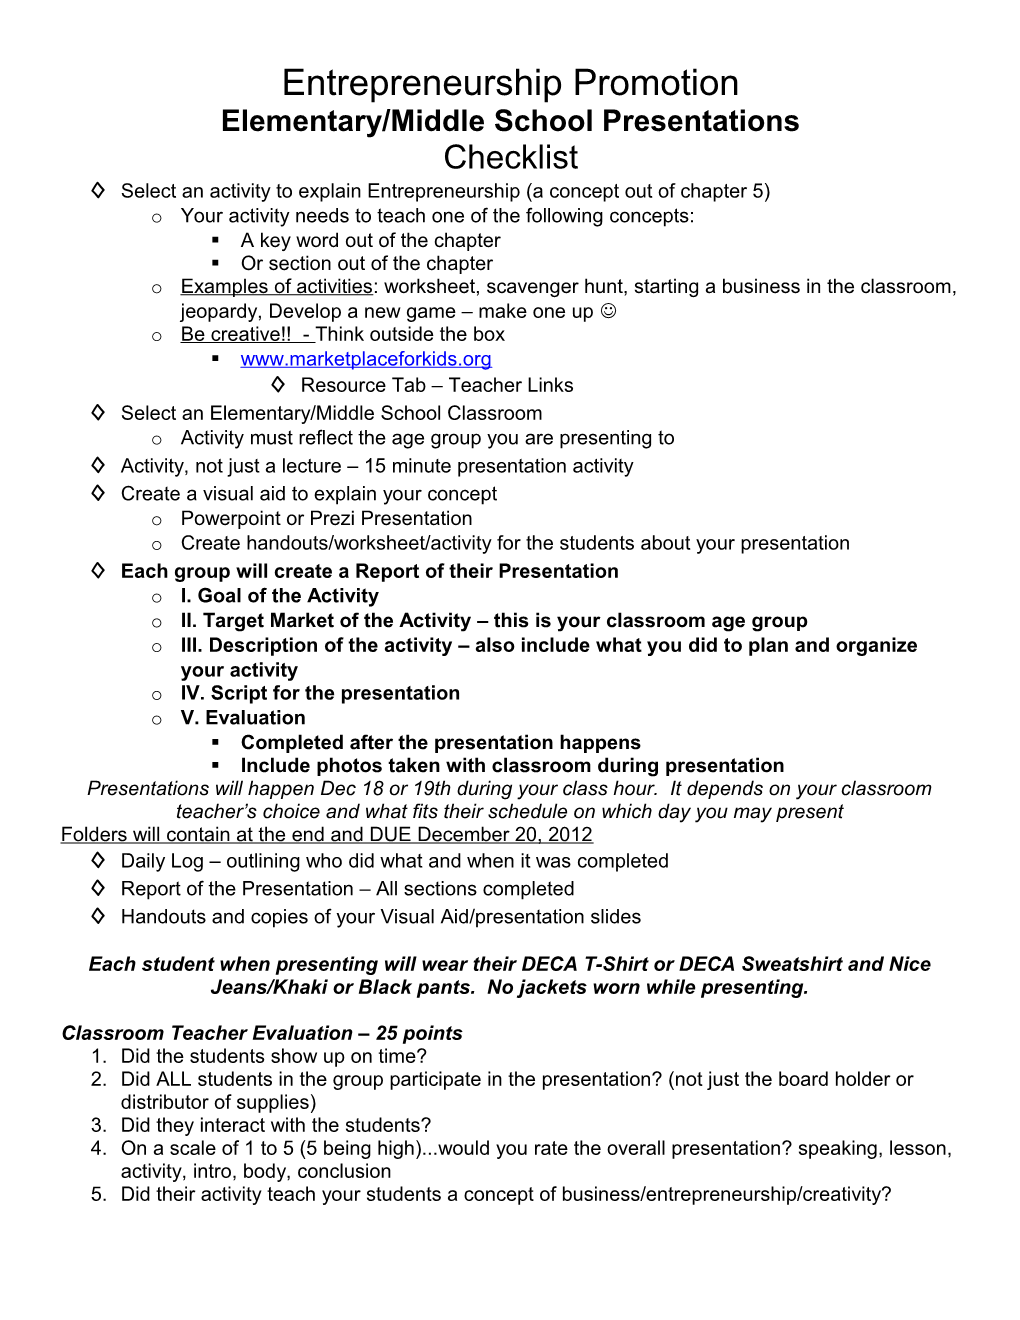 Checklist for Presentation